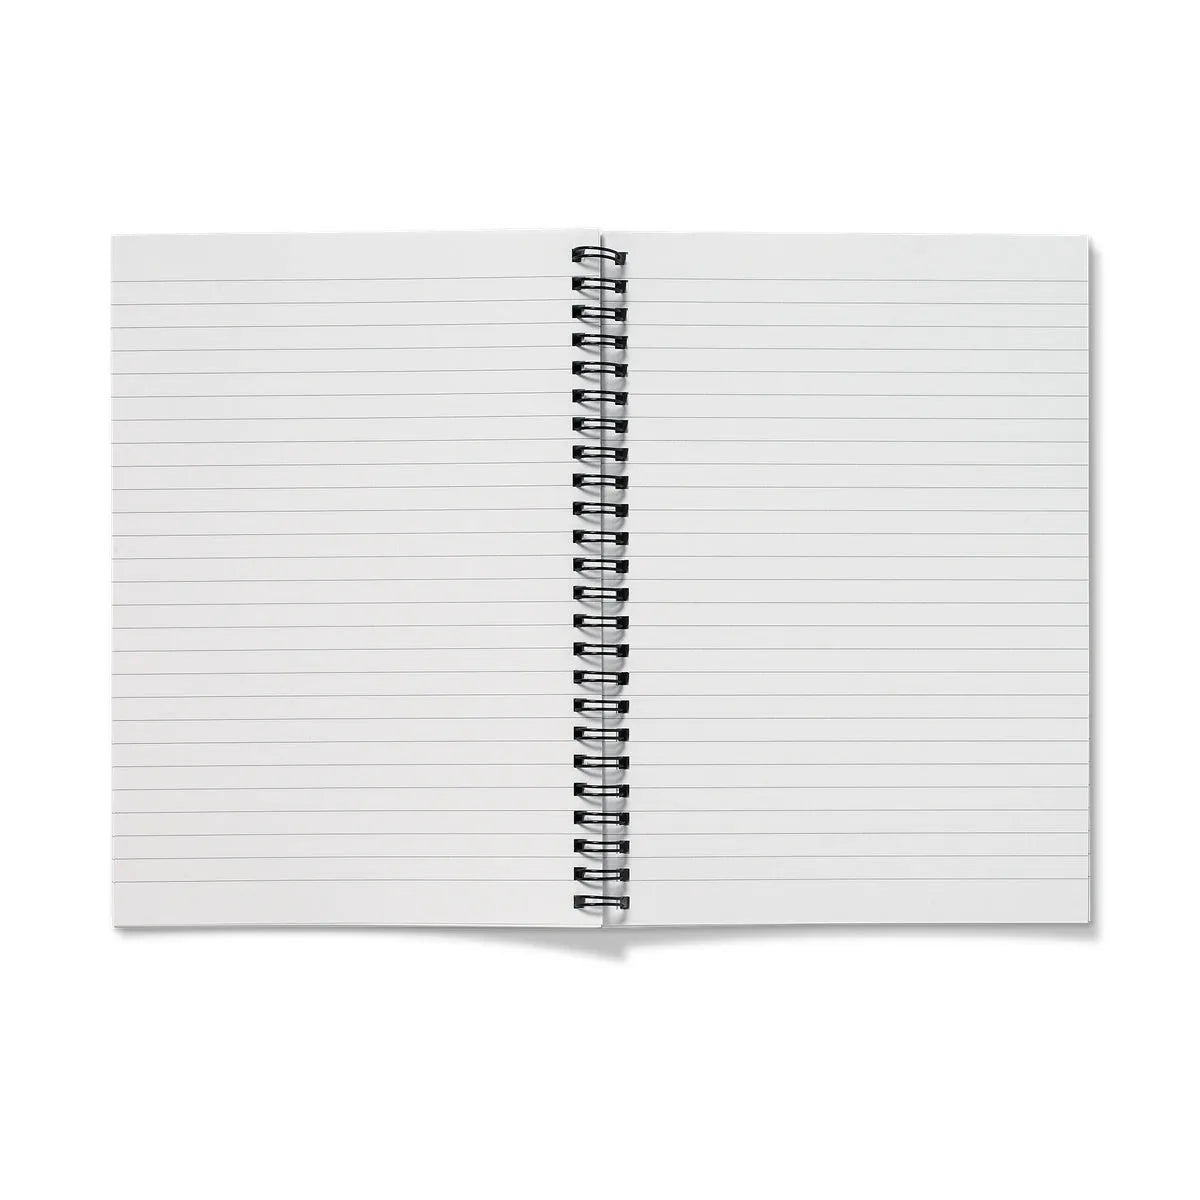 Tropicanarama Notebook - Notebooks & Notepads - Aesthetic Art